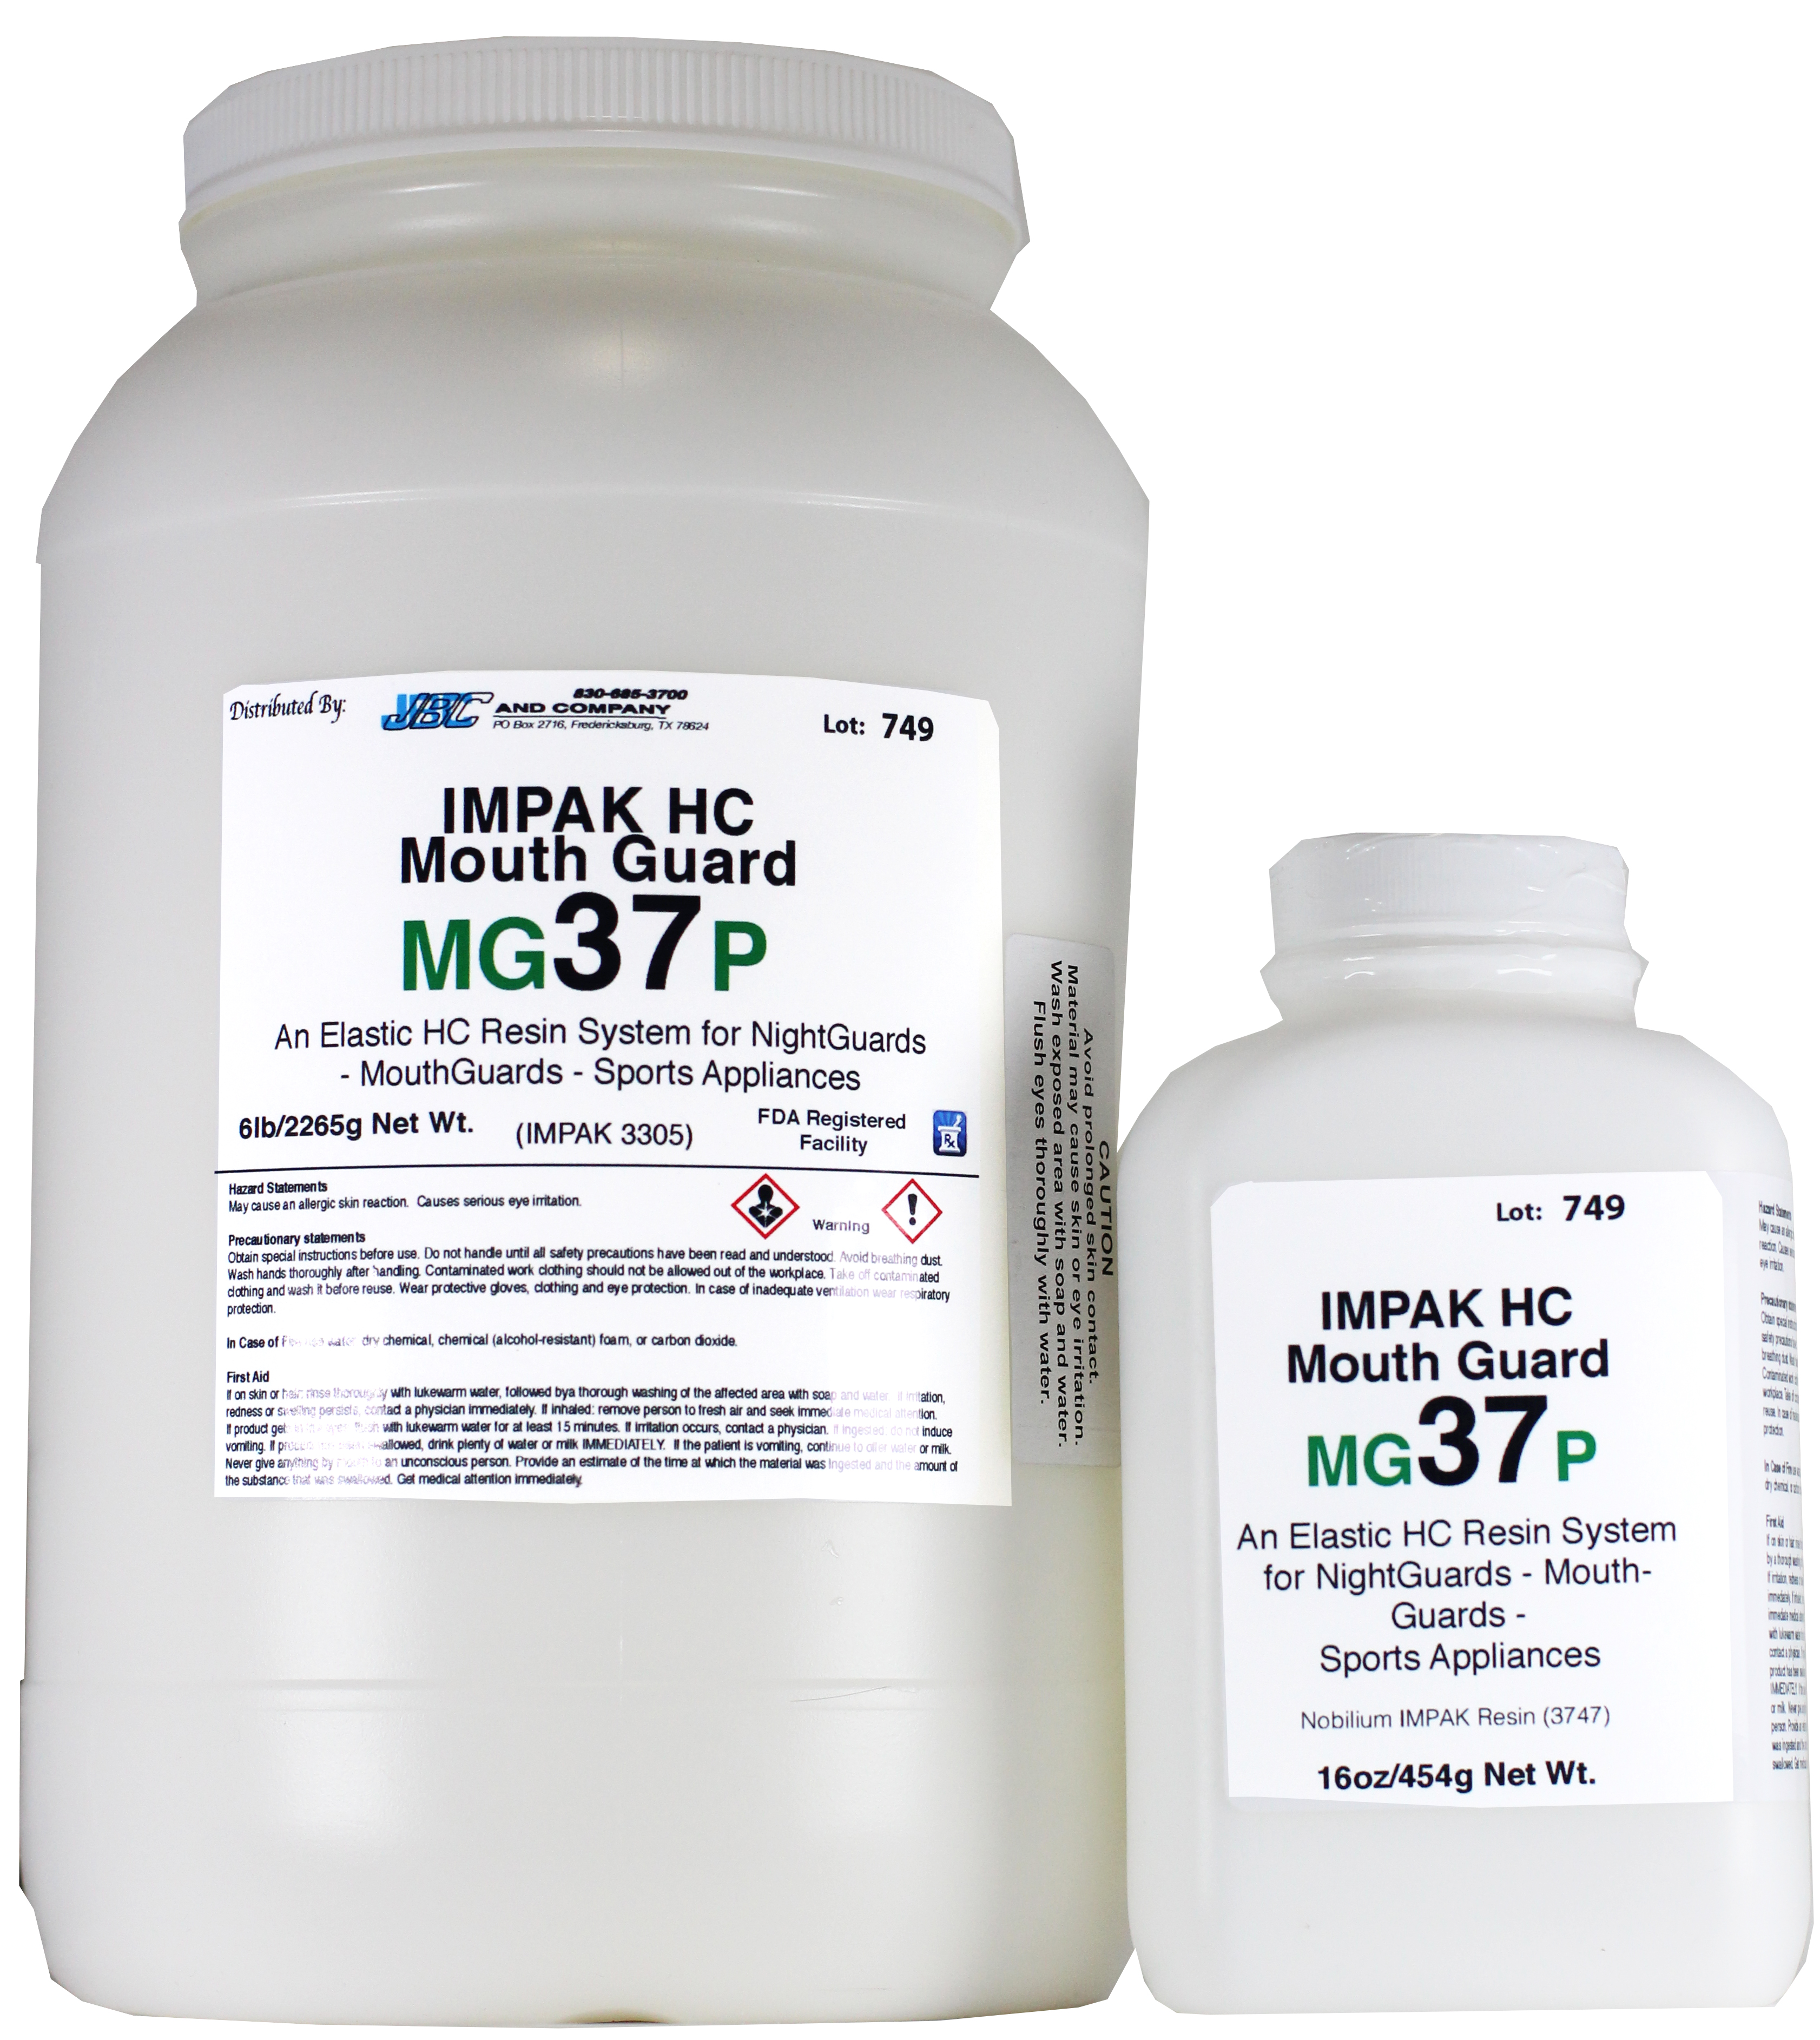 MG37P: Nobilium IMPAK HC Resin Powder